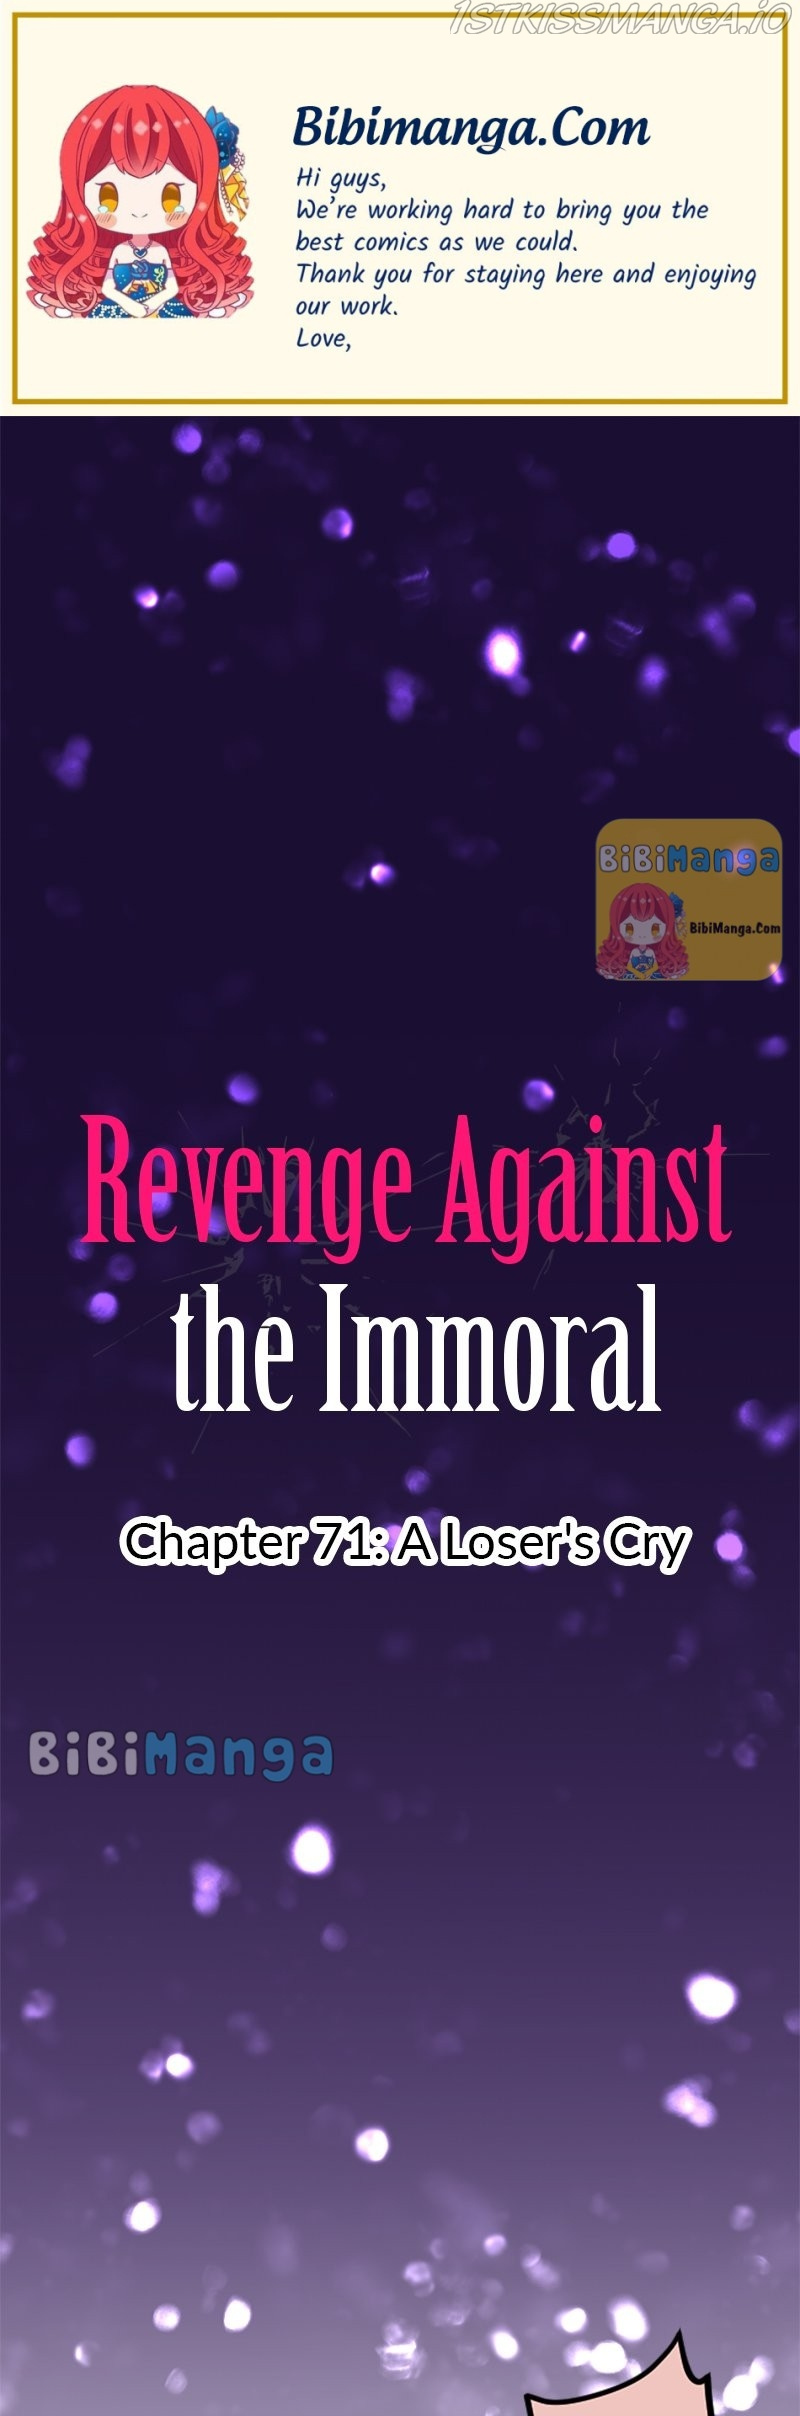 Revenge Against The Immoral Chapter 71